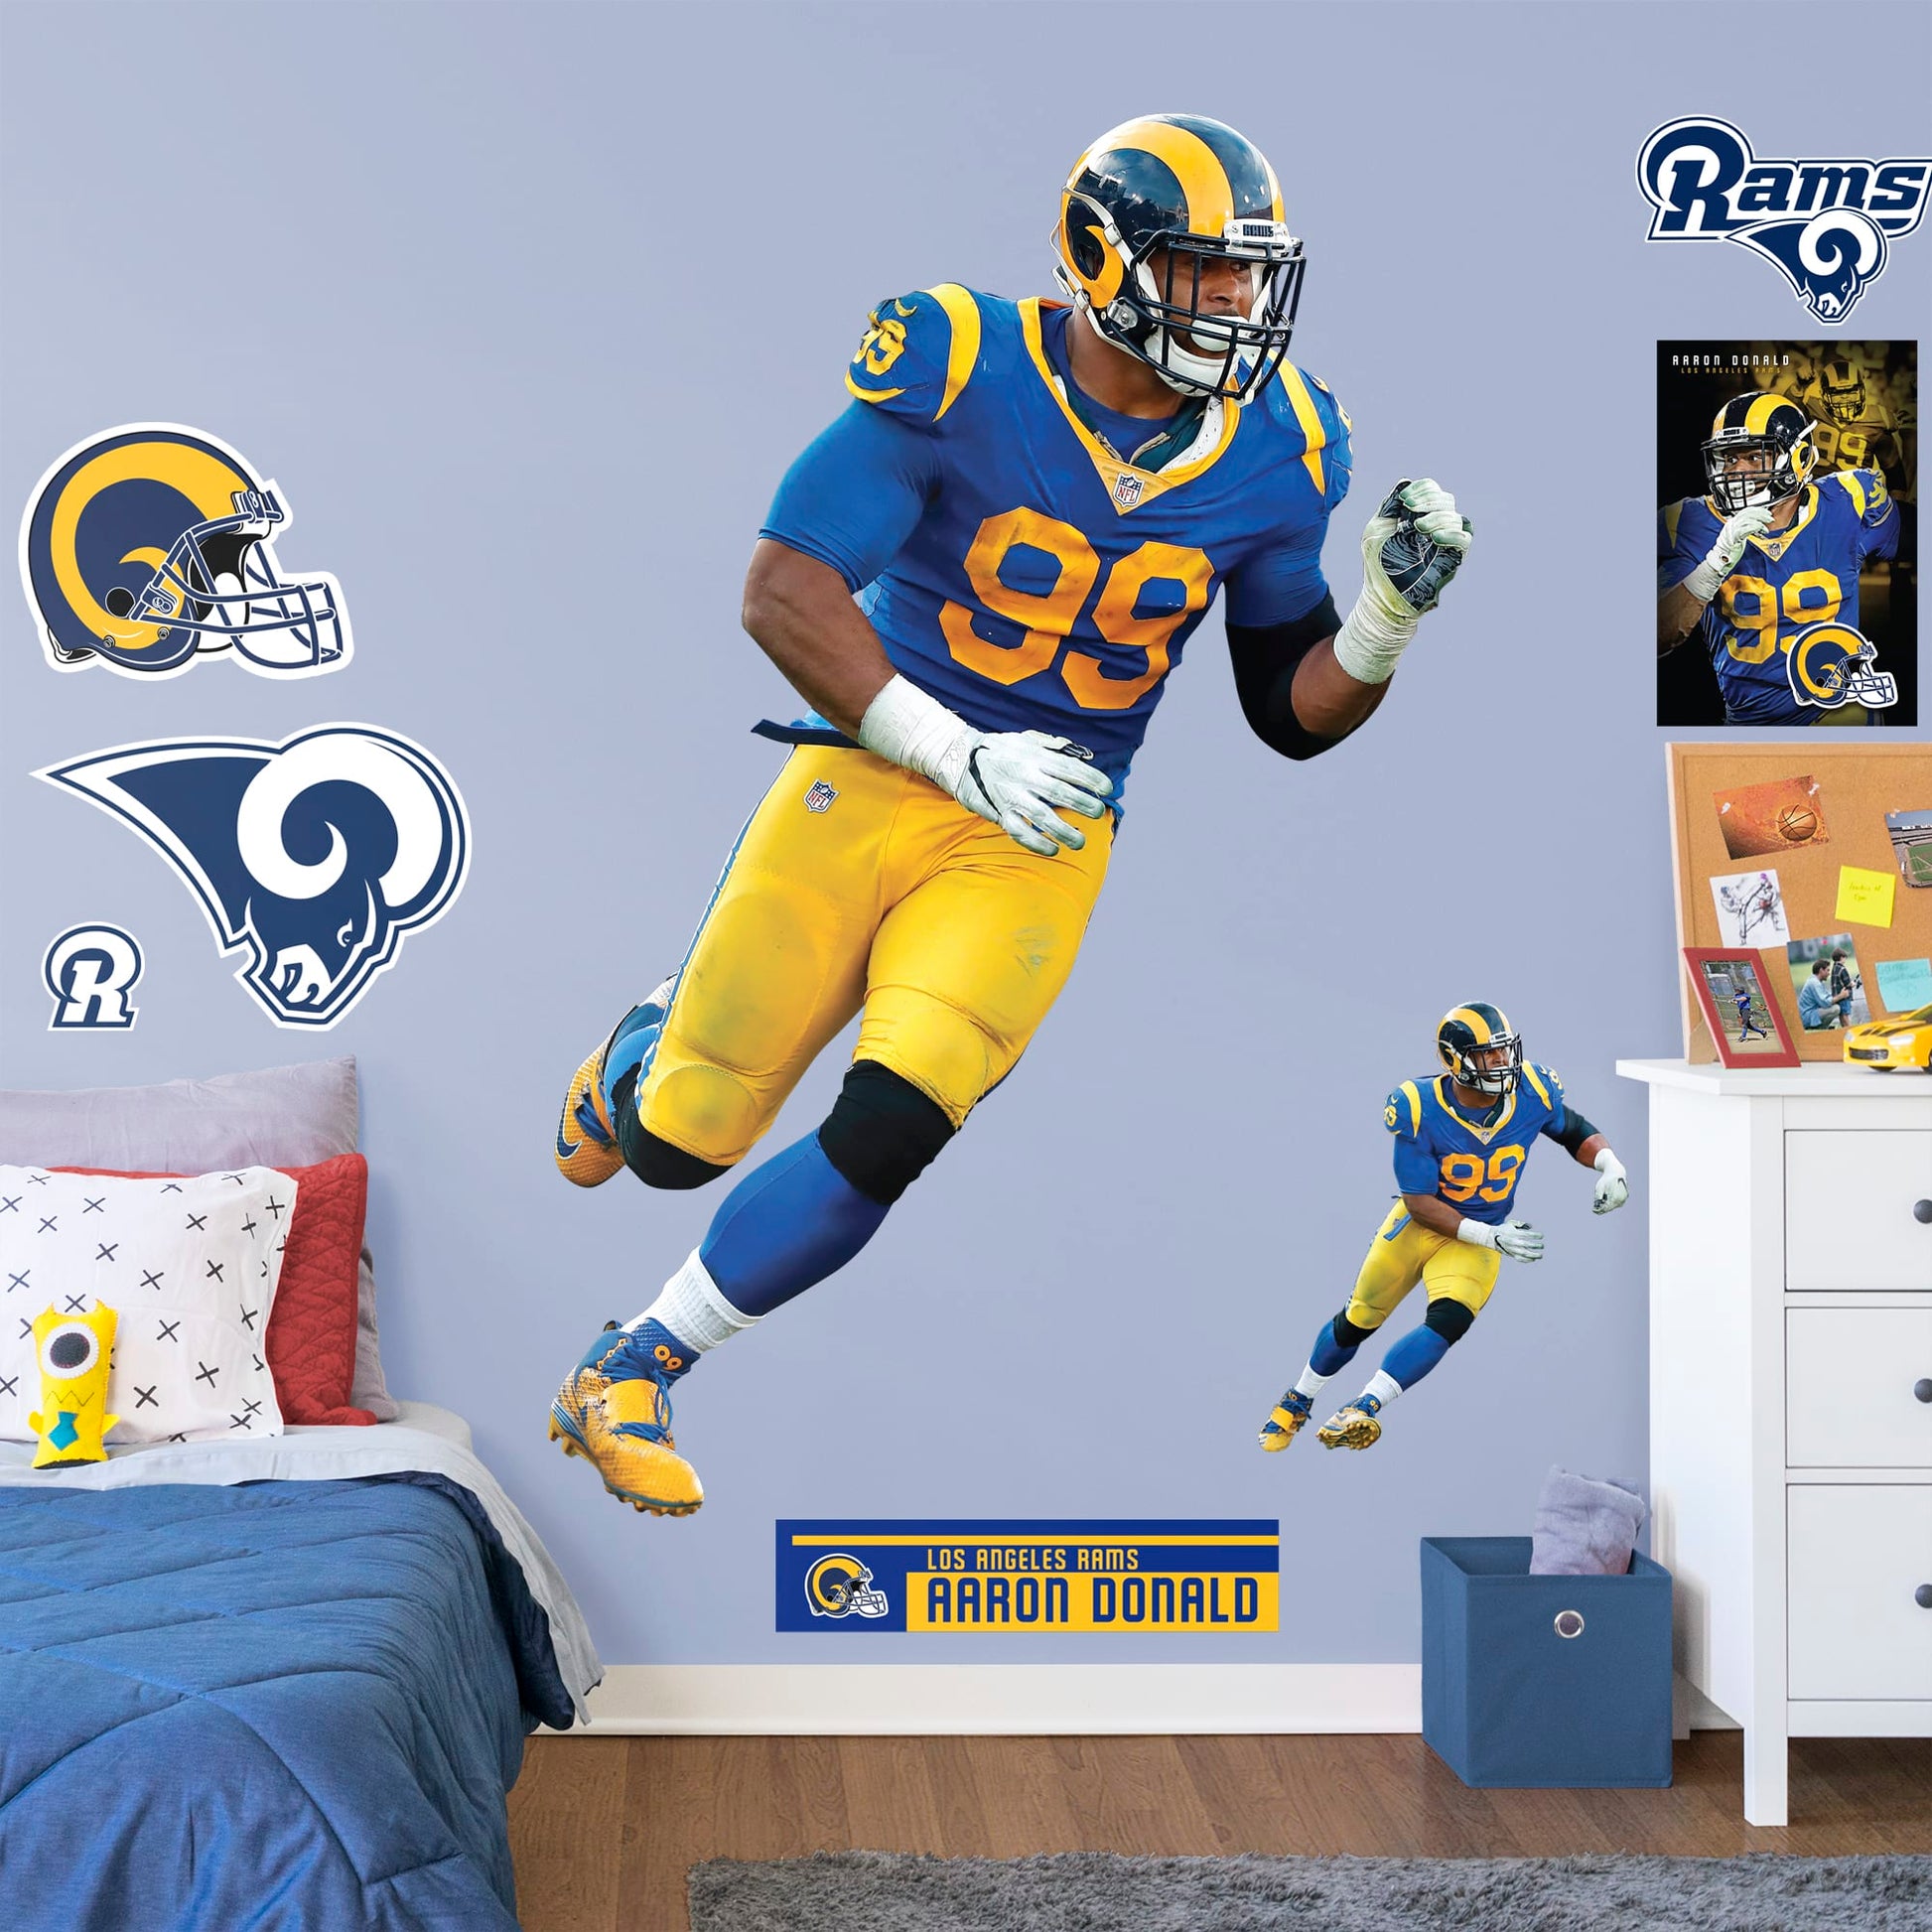 Official Los Angeles Rams Gear, Rams Jerseys, Store, Rams Apparel